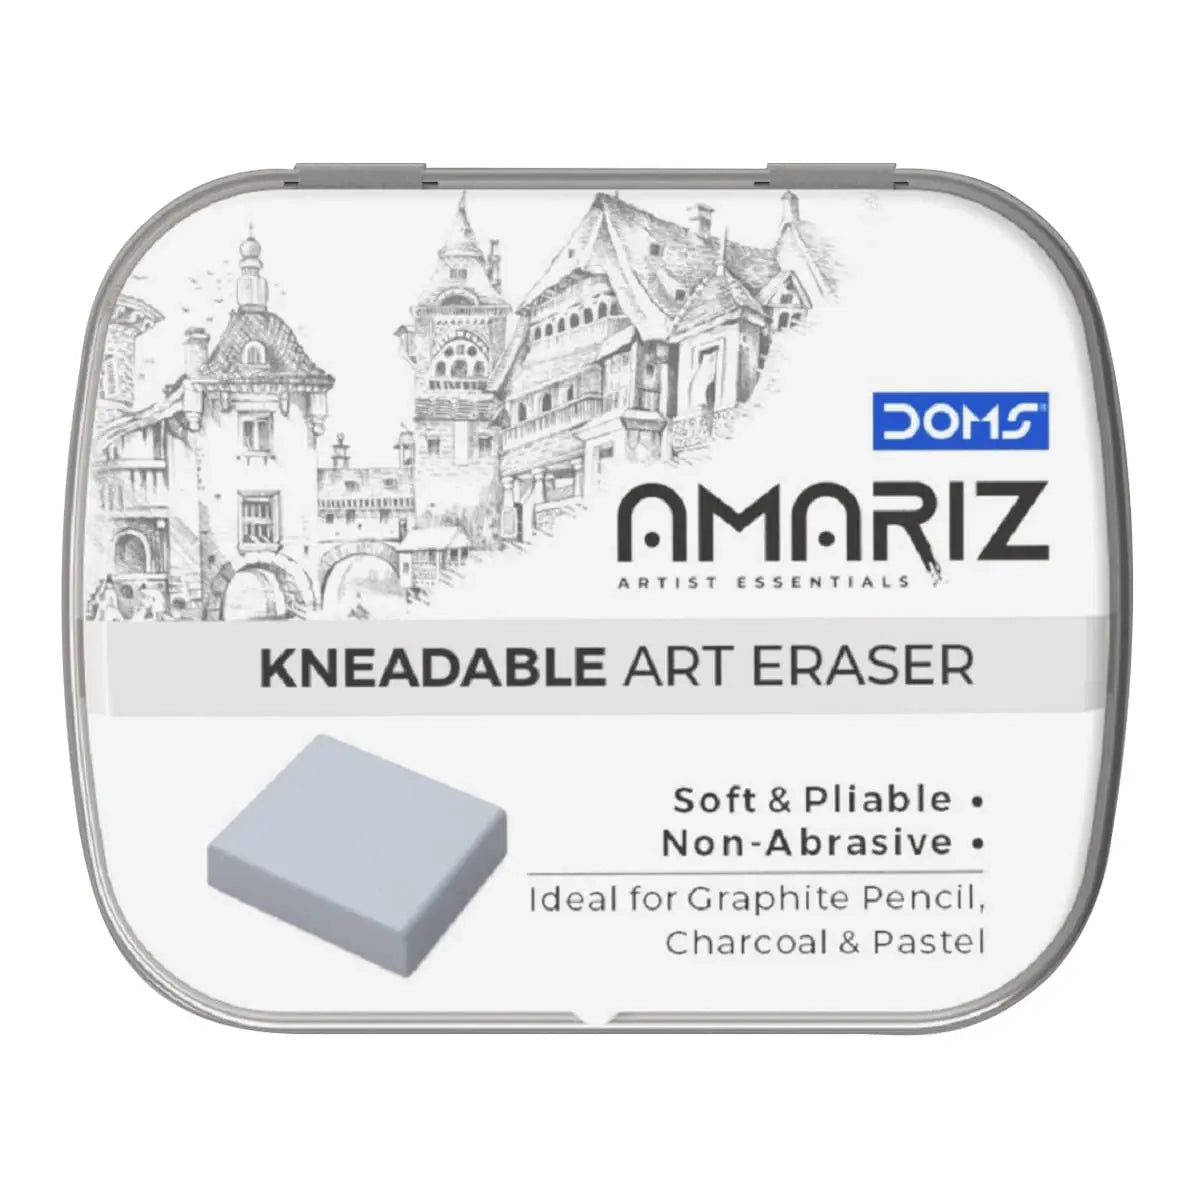 Doms Amriz Kneadable Art Eraser Soft & Pliable Ideal for Graphite Pencil, Charcoal & Pastel Doms